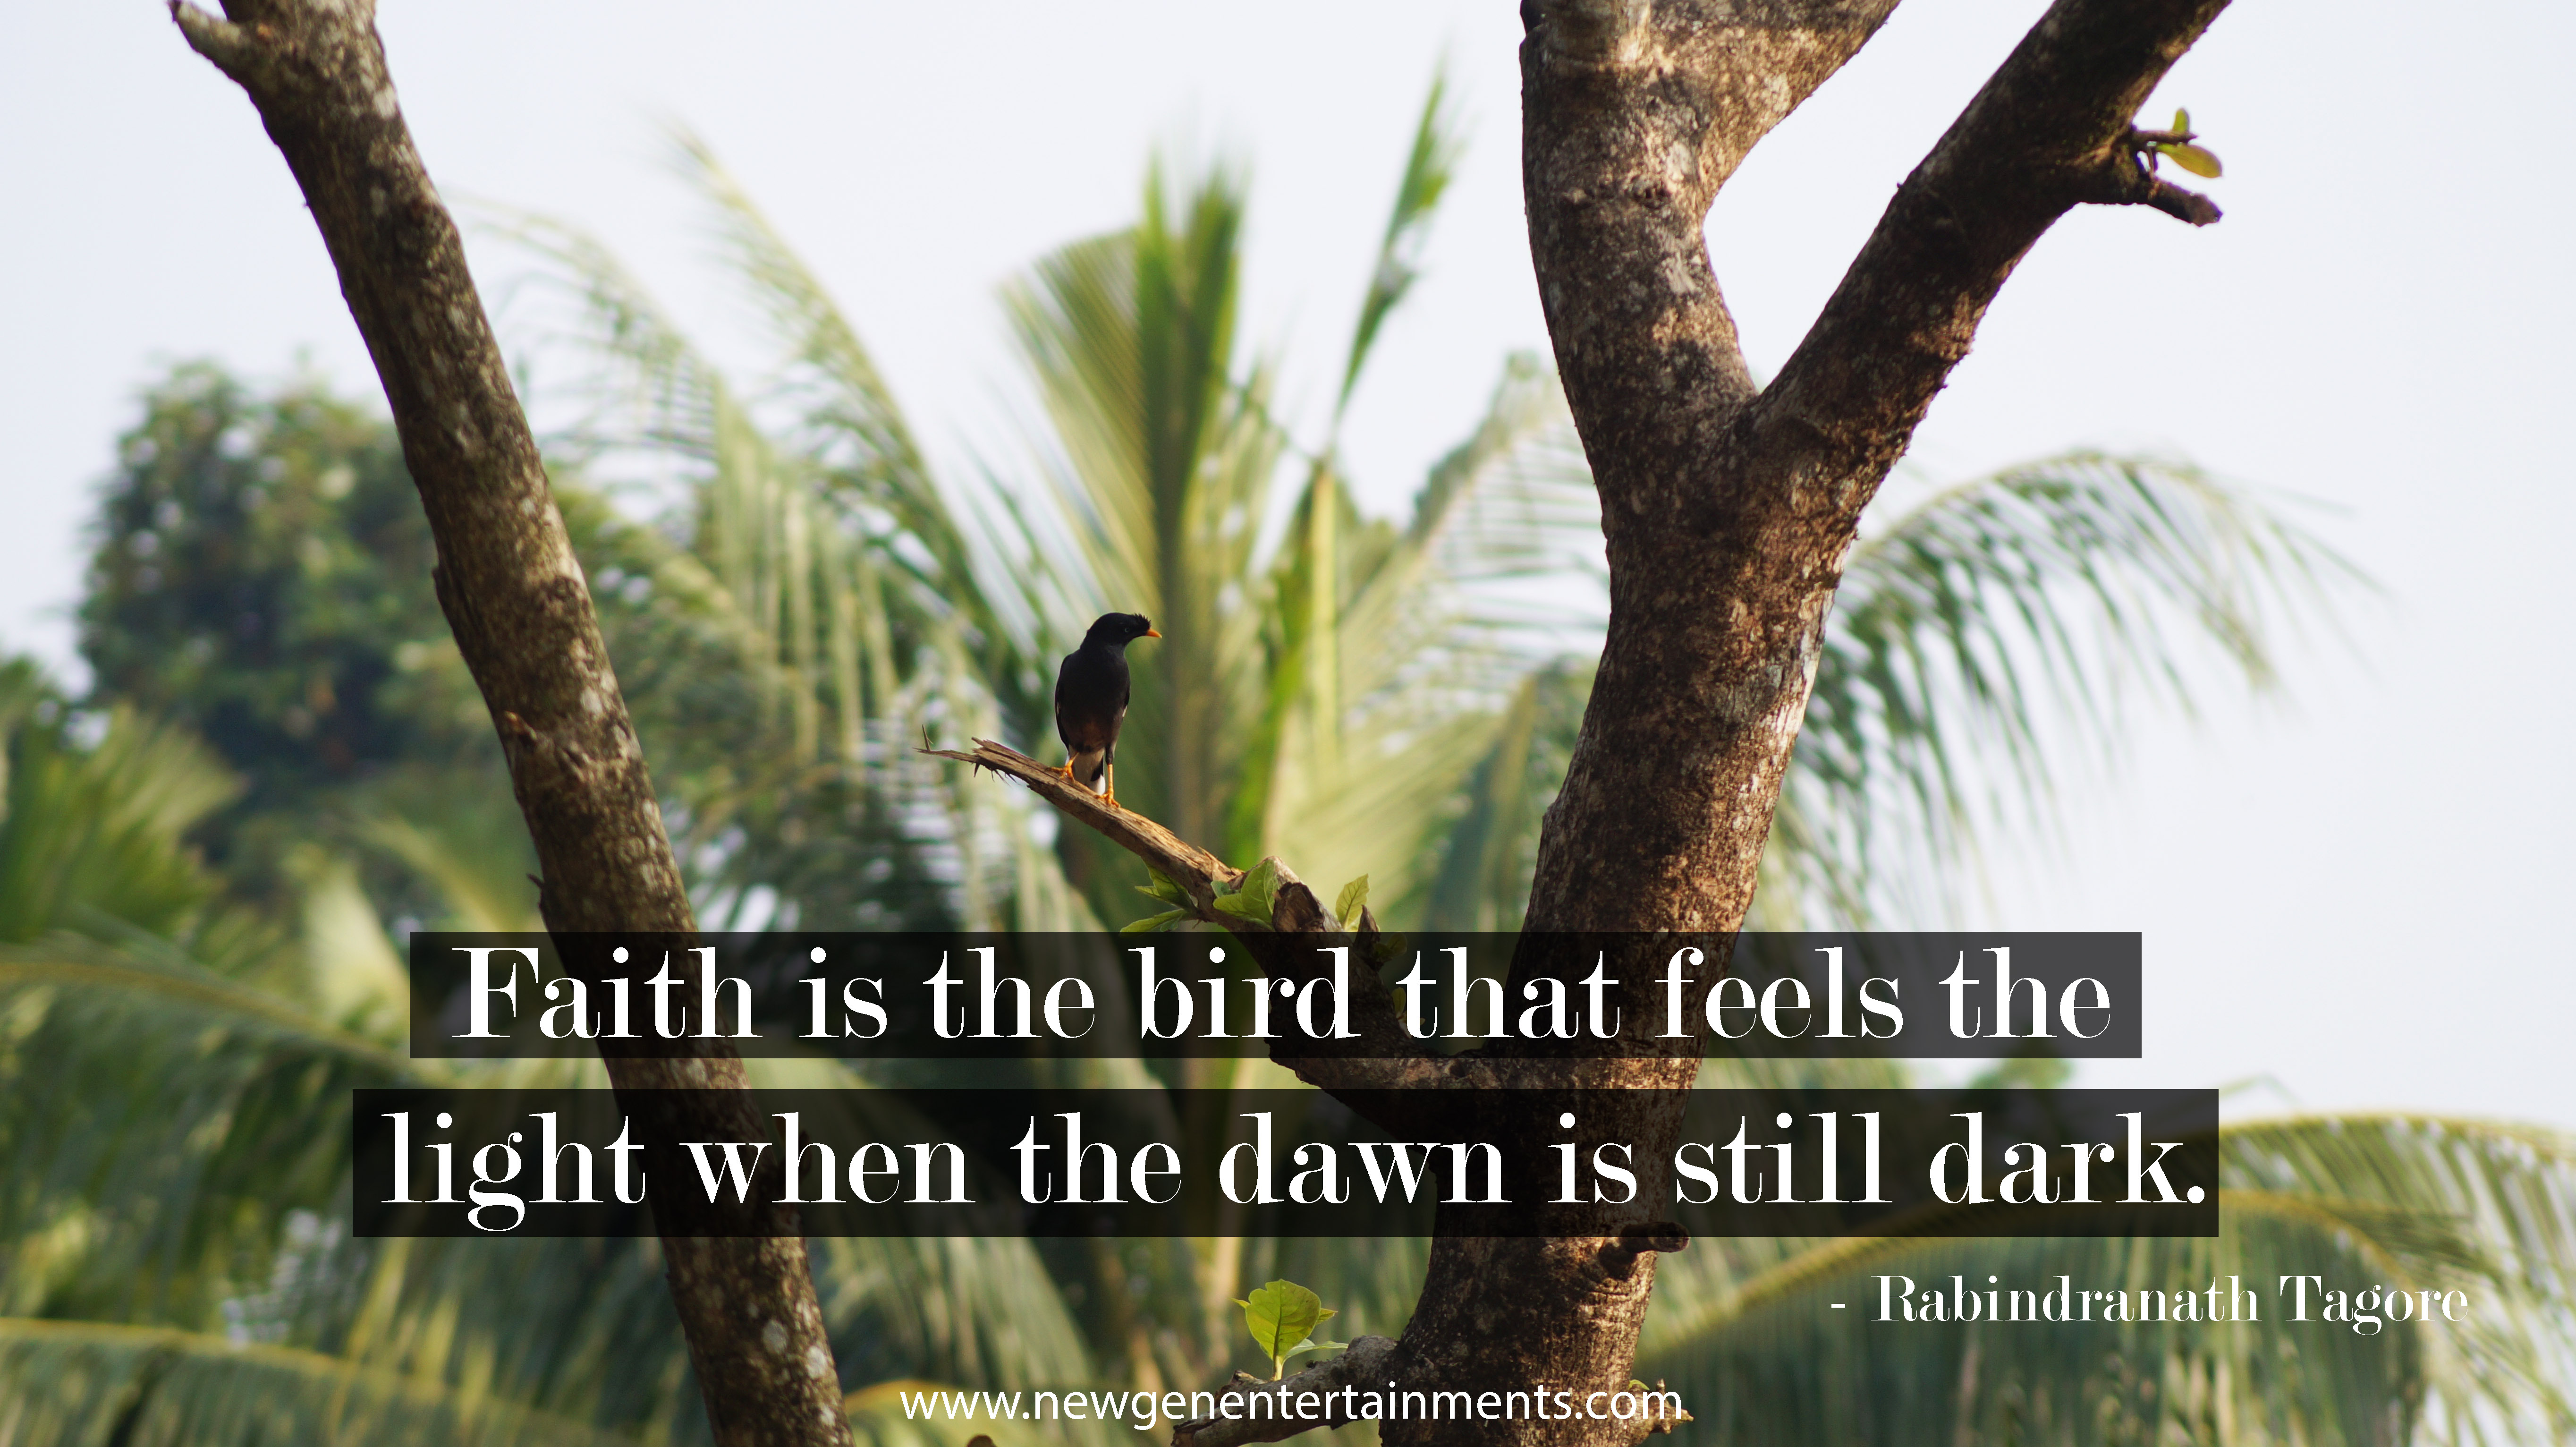 Faith is the bird that feels the light when the dawn is still dark